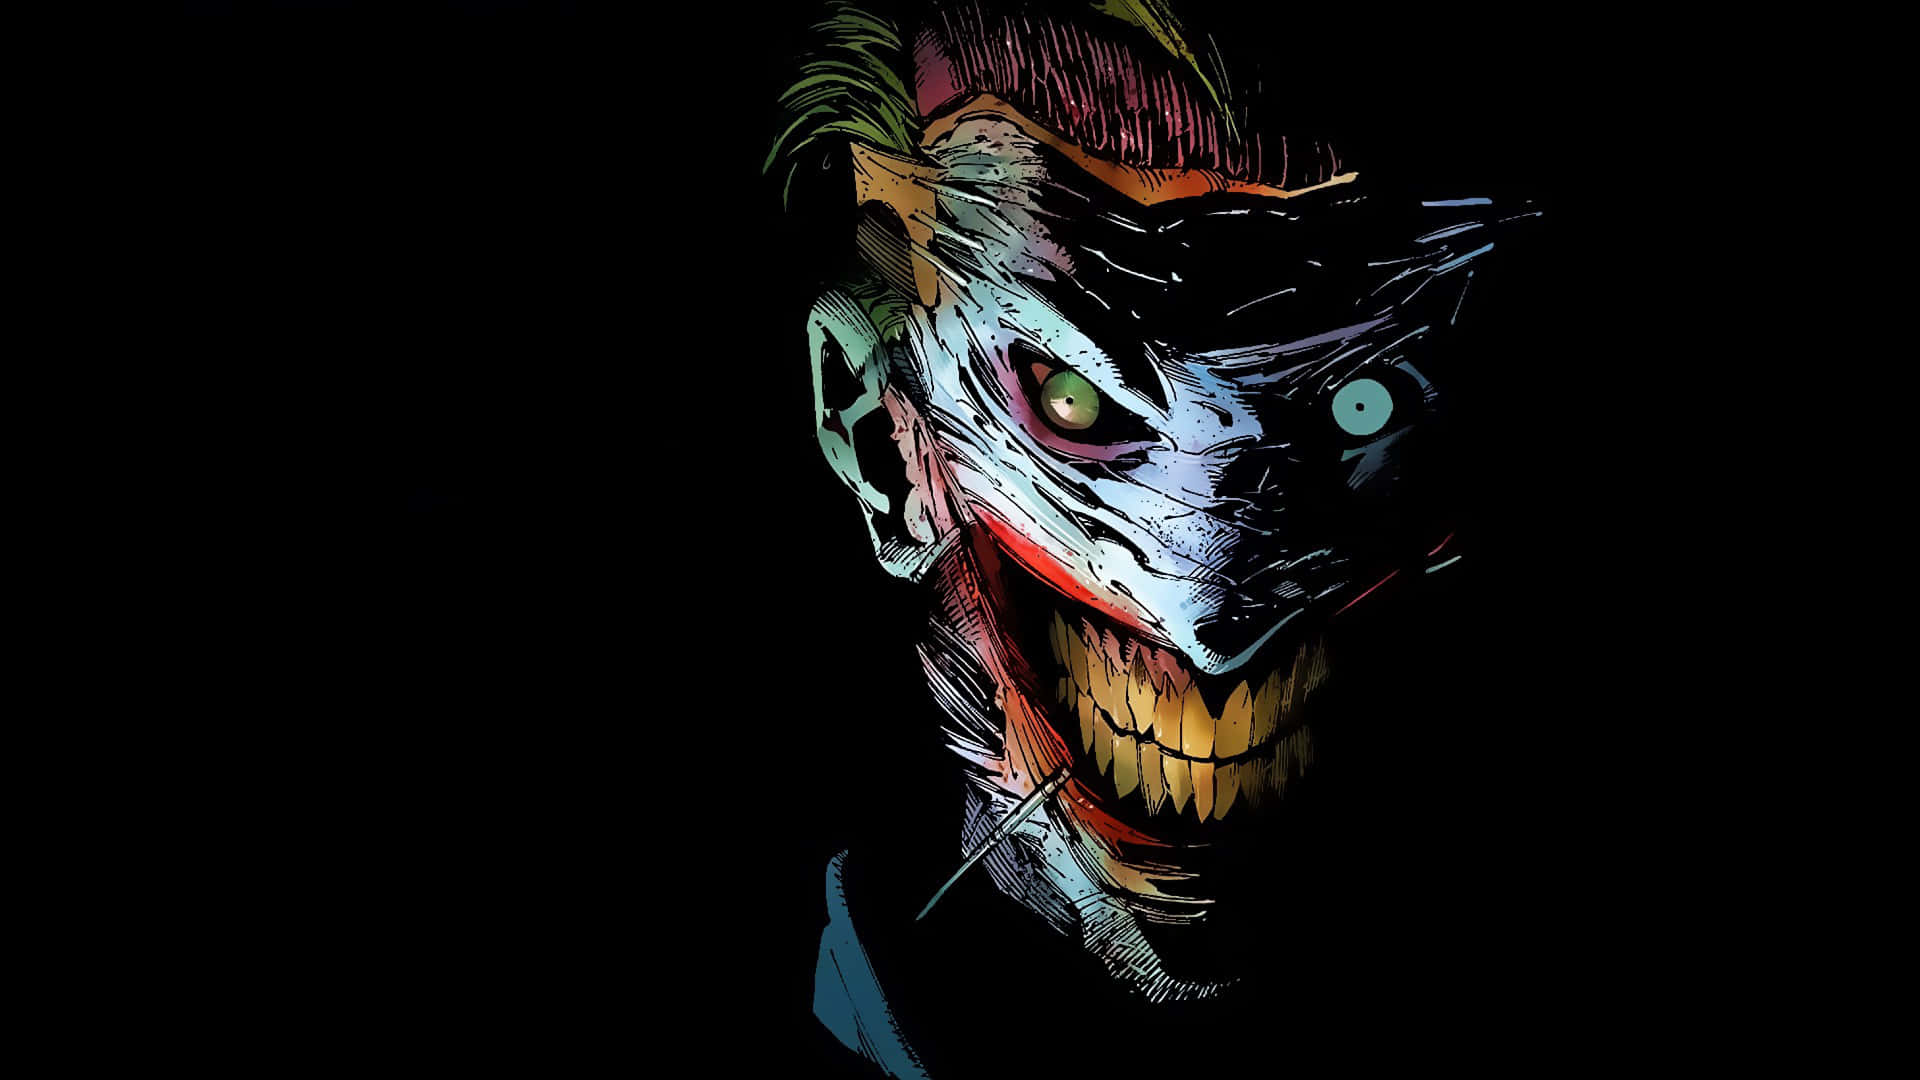 Derclownprinz Des Verbrechens - Der Joker In All Seiner Wunderbaren Comicbuch-glorie. Wallpaper